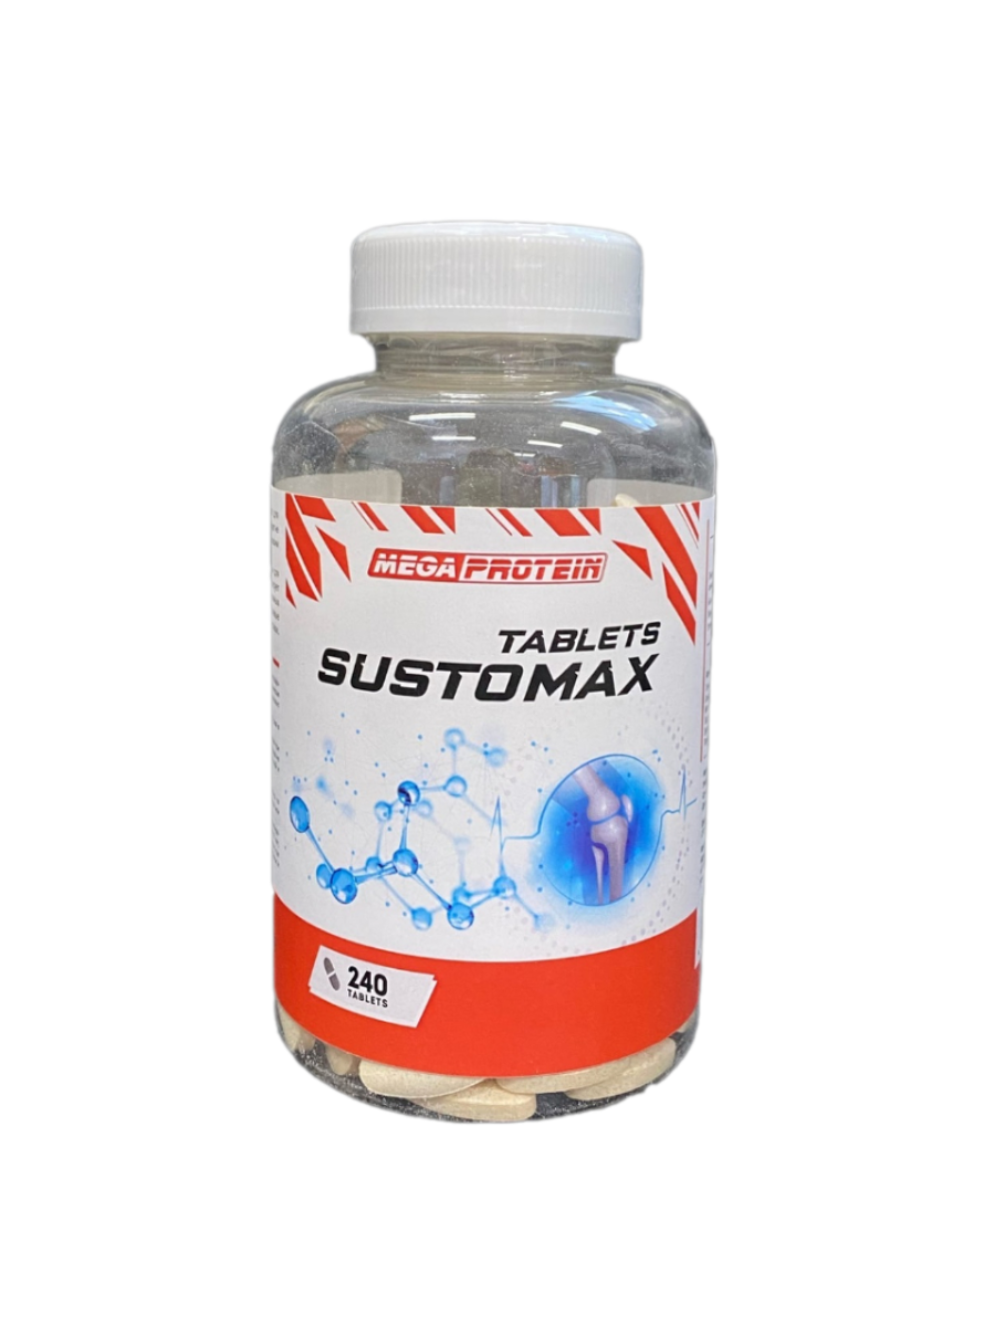 SUSTOMAX tabs (MegaProtein)